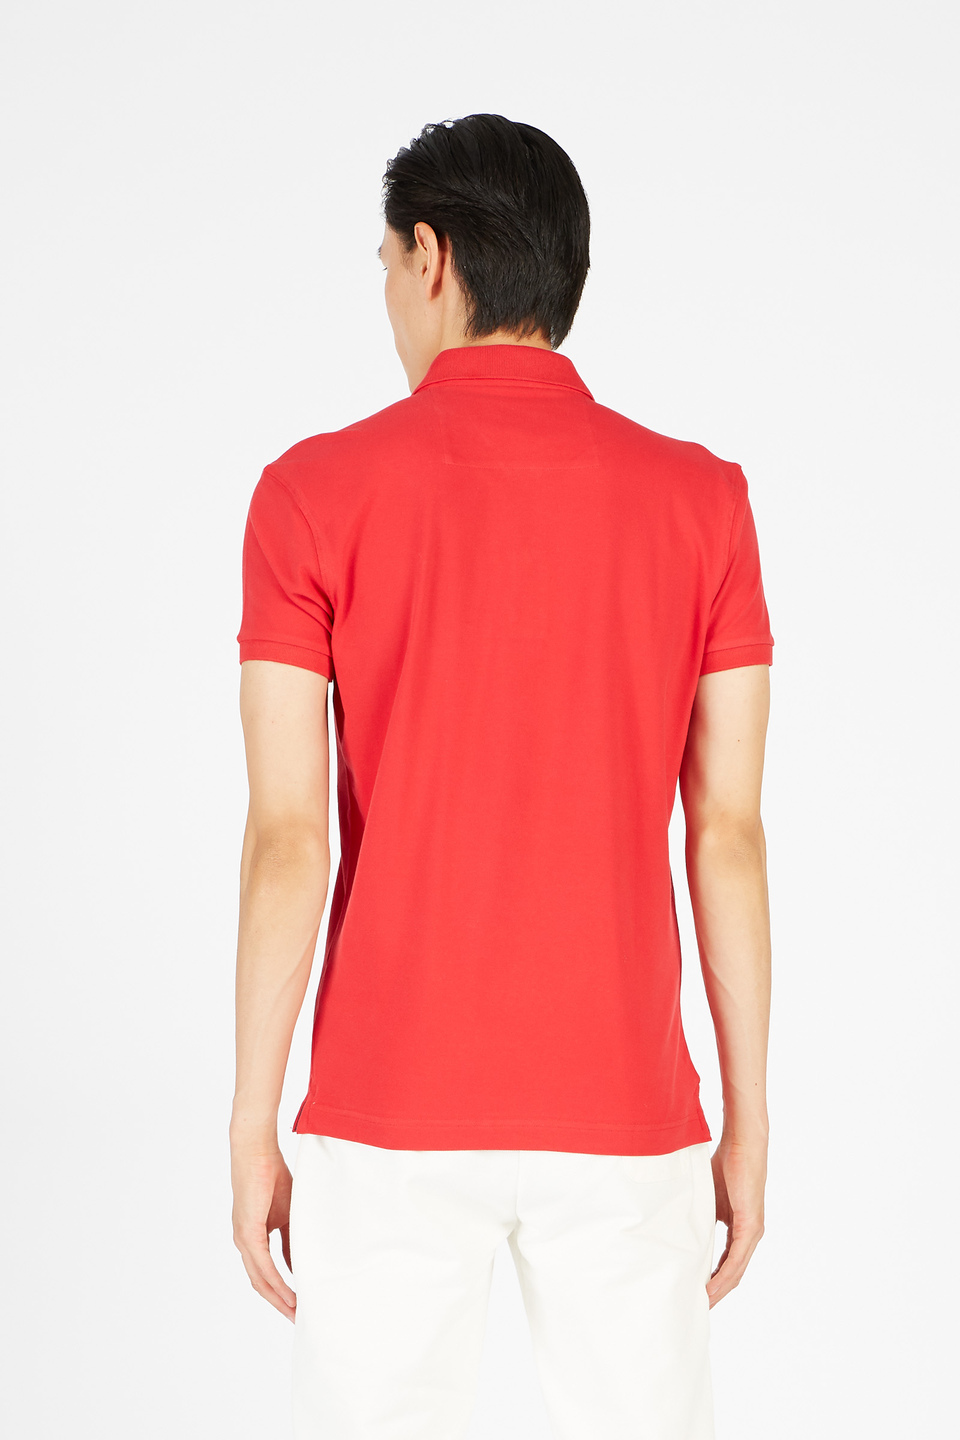 Herren-Poloshirt slim fit - La Martina - Official Online Shop